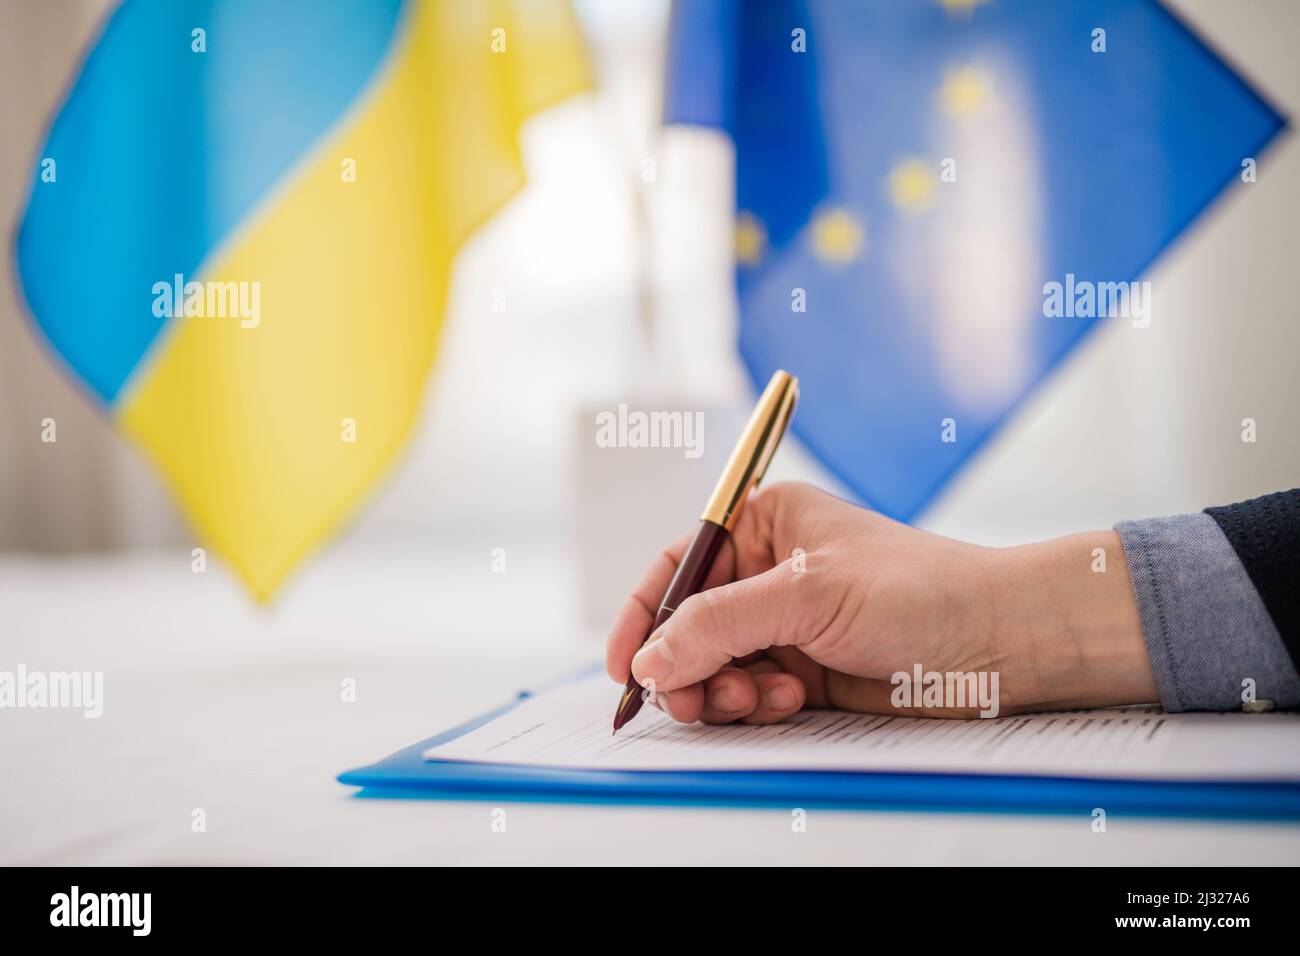 Signing document between European Union and Ukraine, Ukraine joining Europe concept. Stock Photo